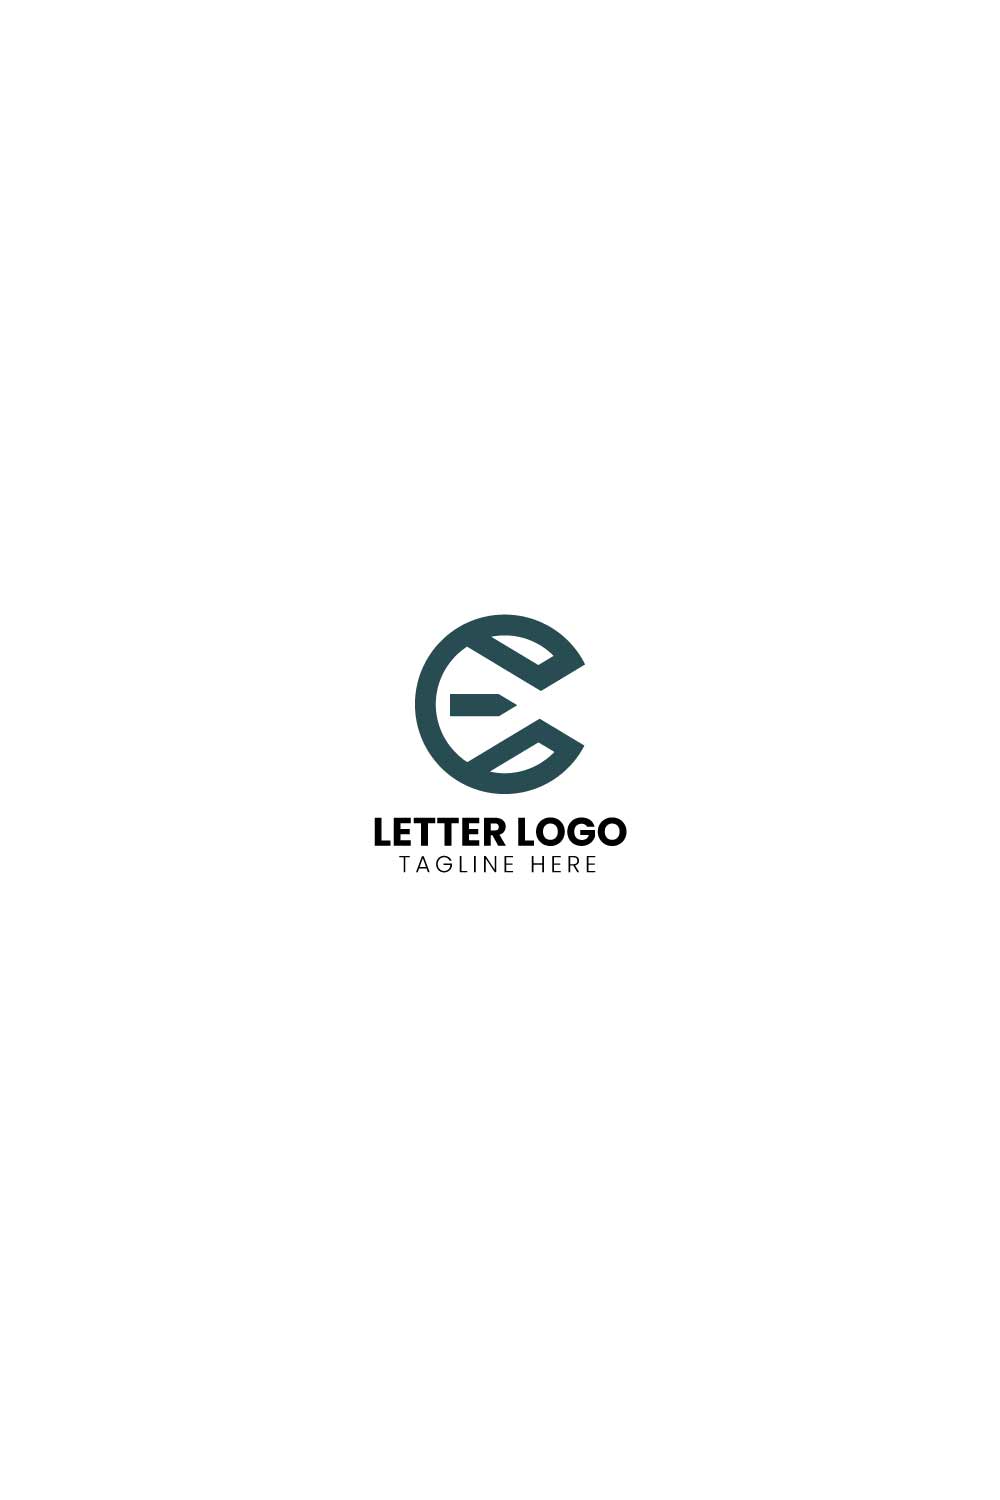 Corporate Letter CE logo design pinterest preview image.